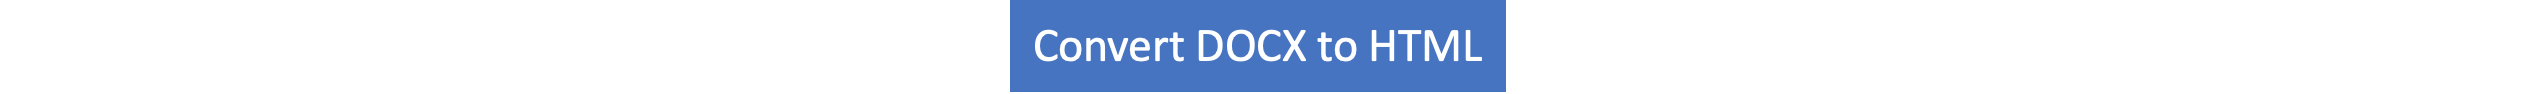 DOCX do HTML